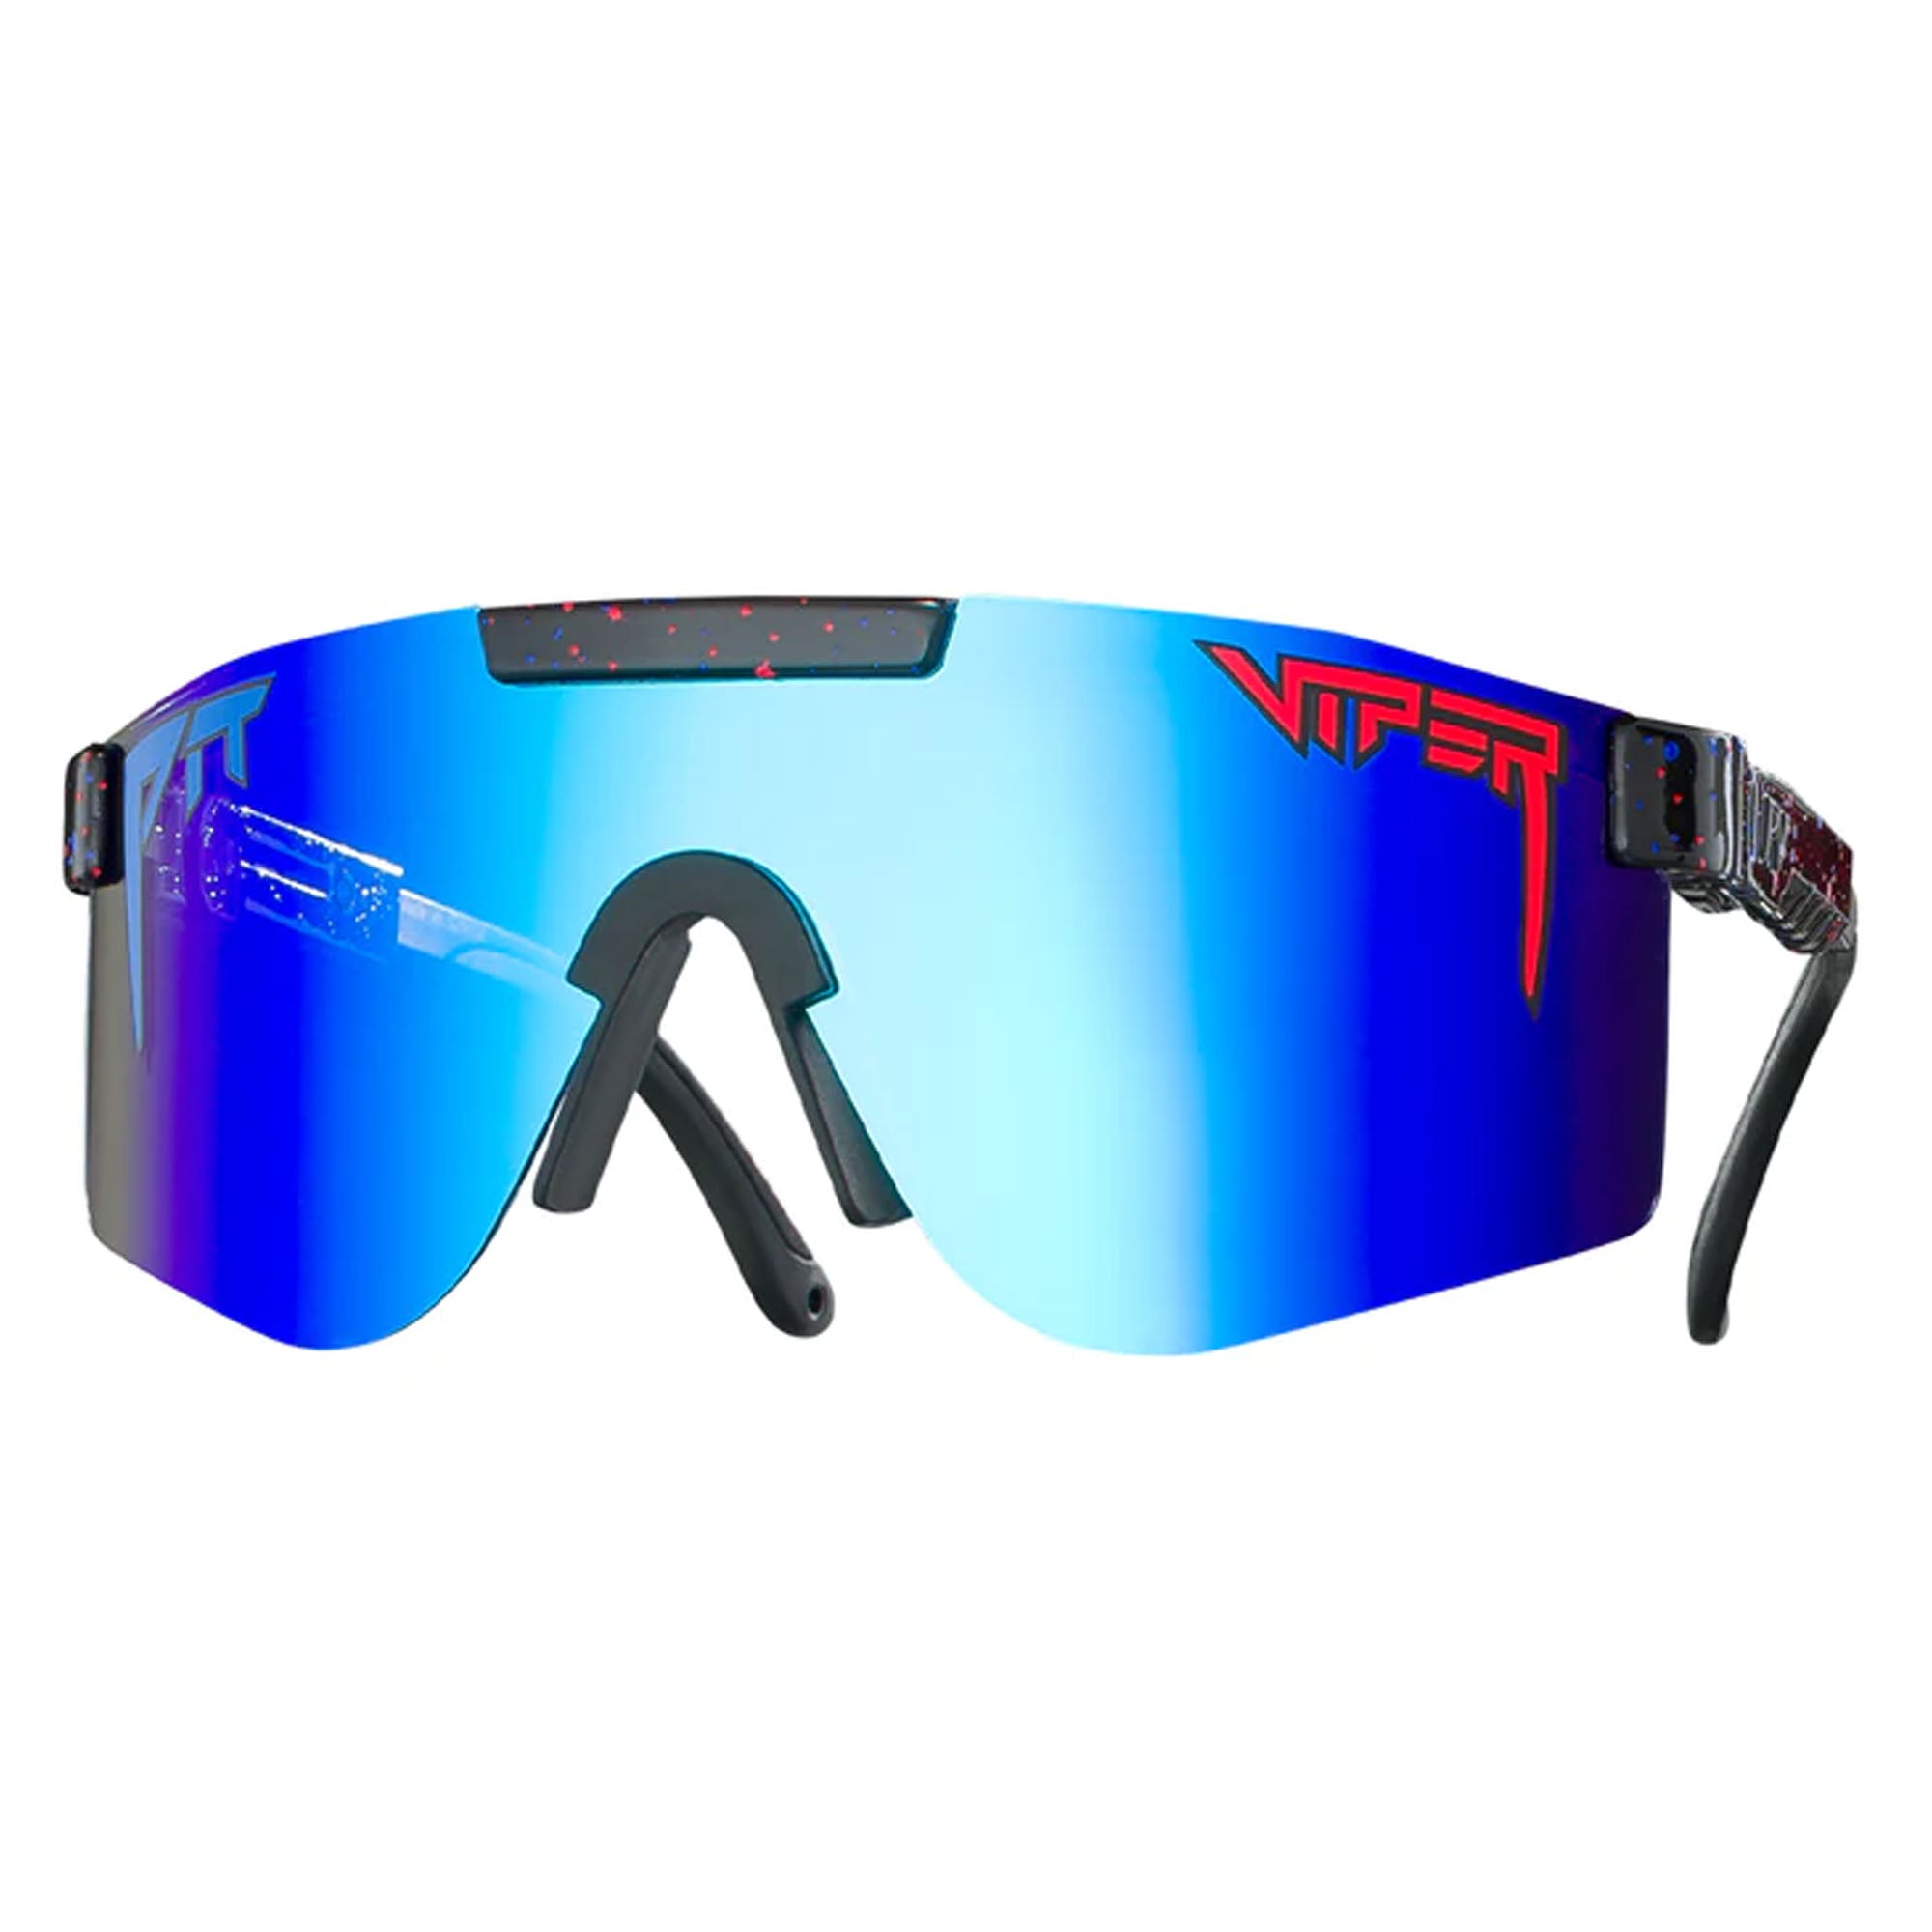 Pit Viper Inspired Polarized Sunglasses  Pit viper, Sunglasses, Polarized  sunglasses